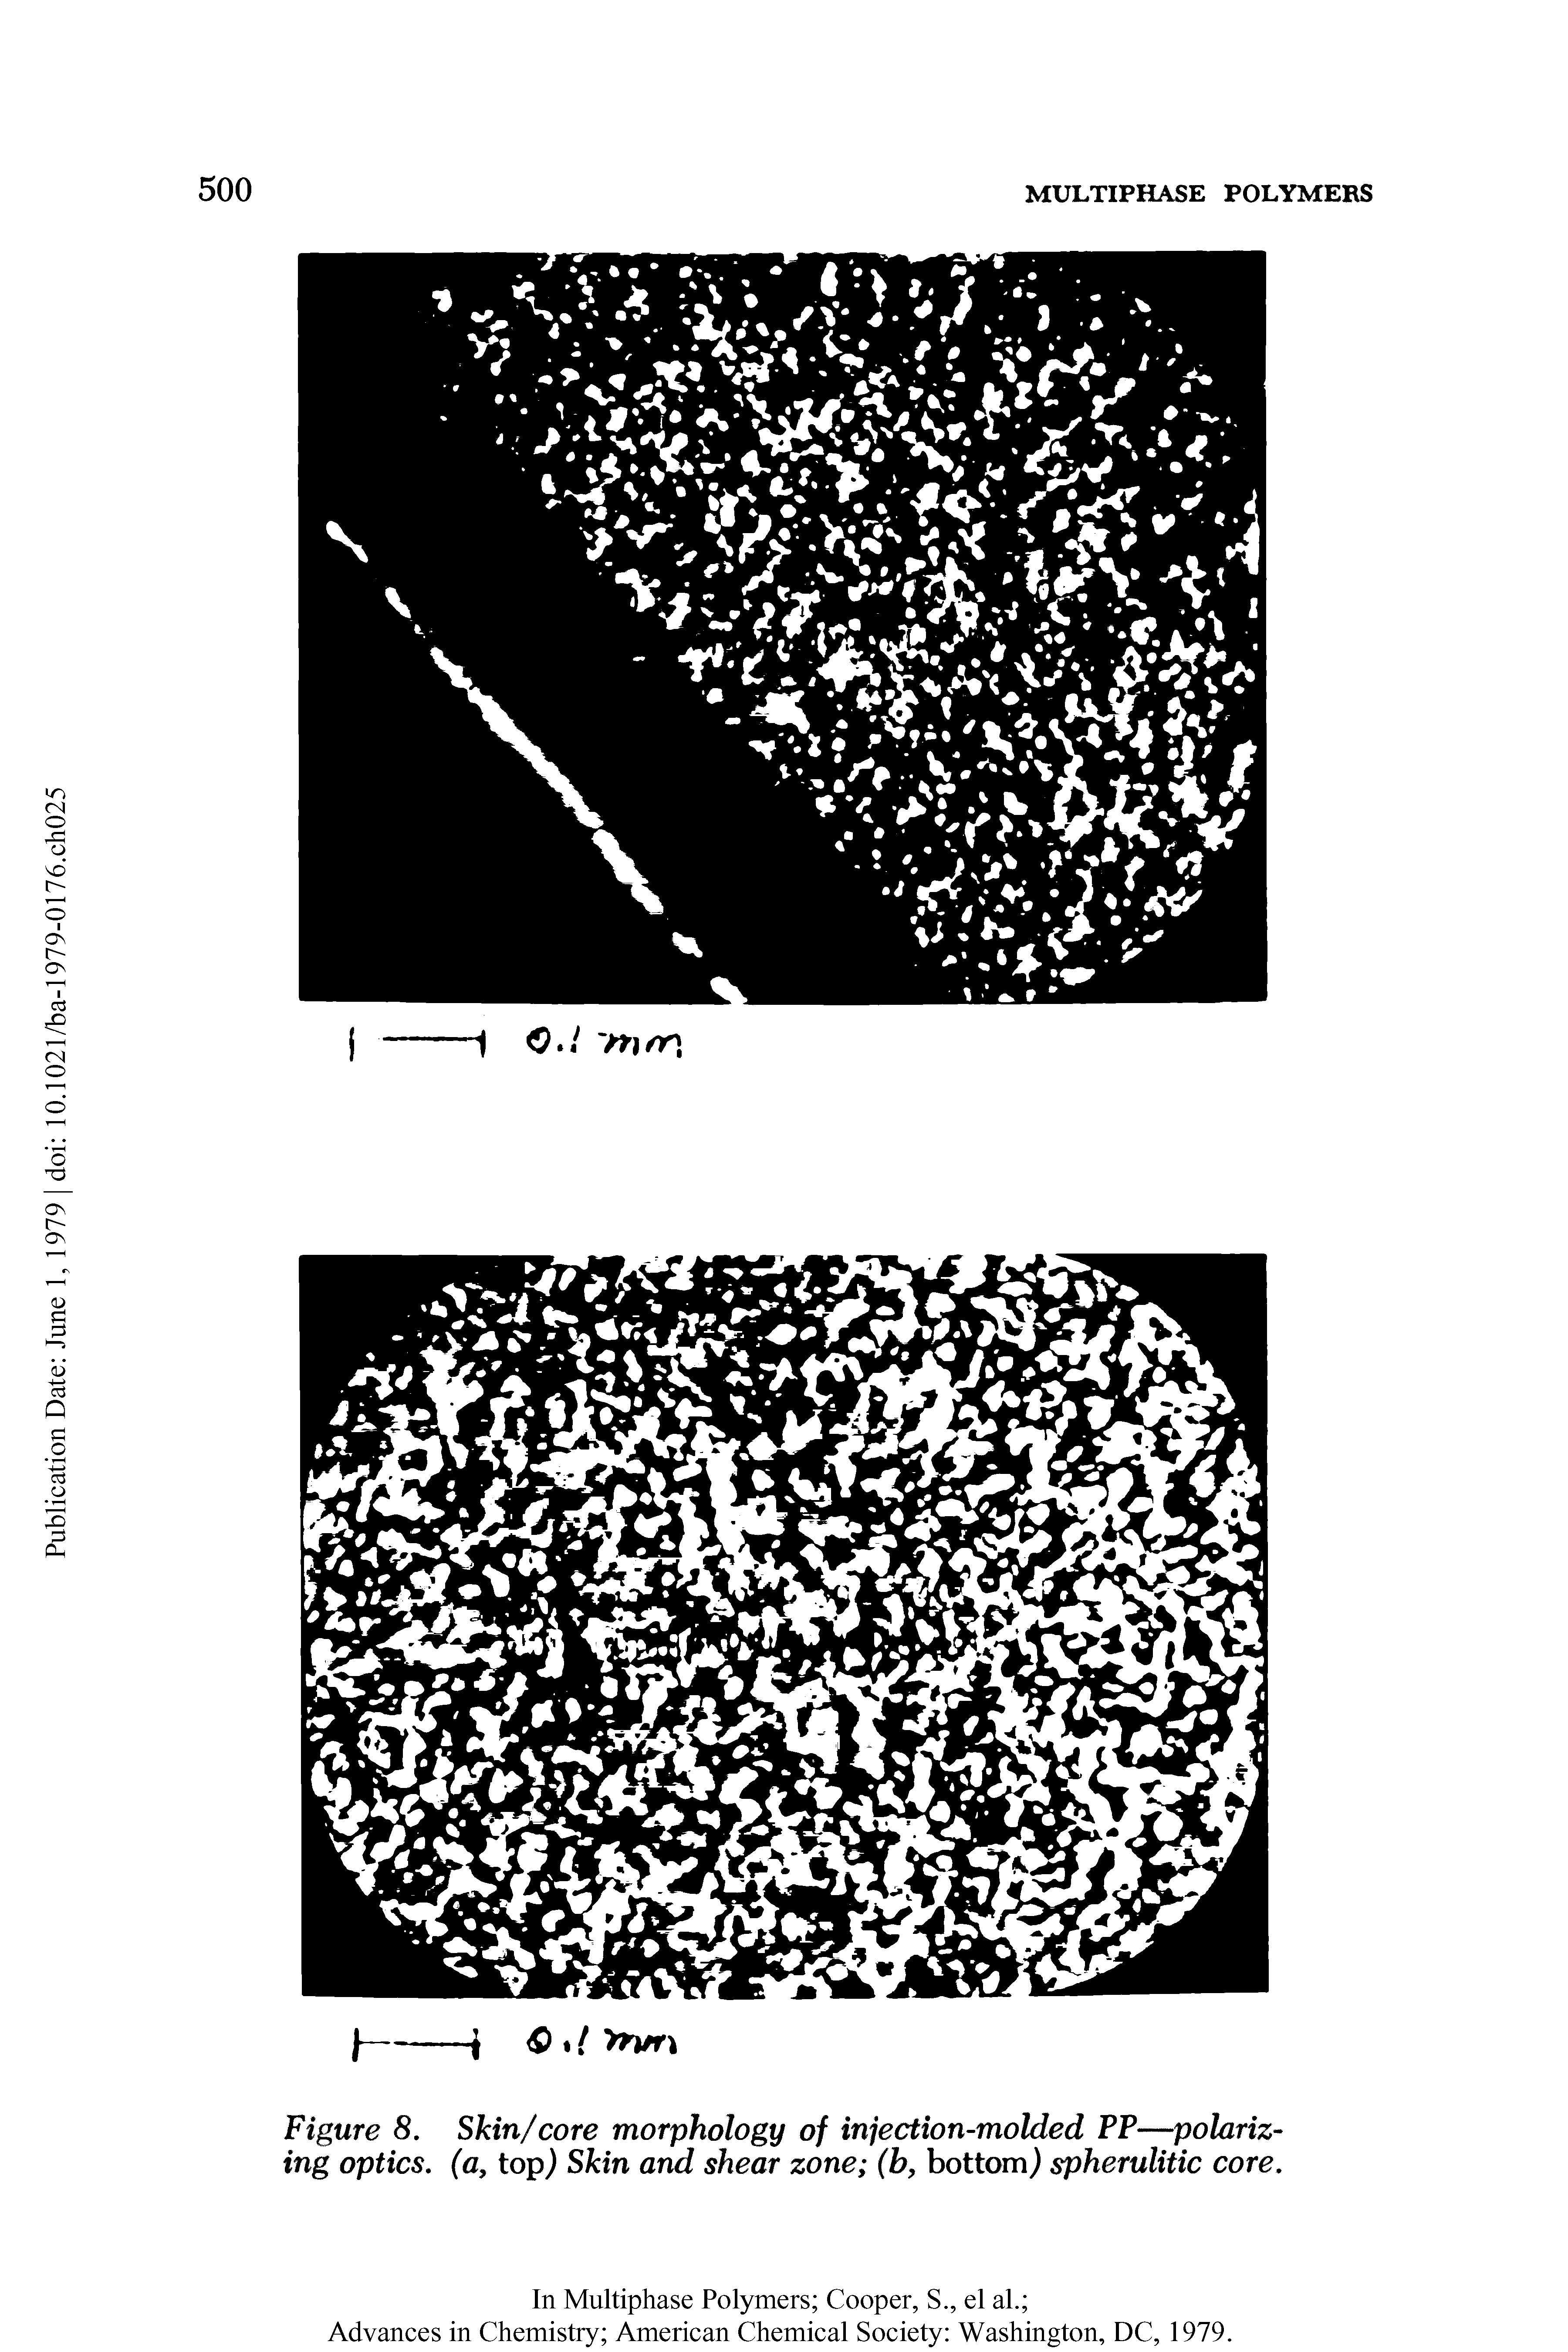 Figure 8. Skin/core morphology of injection-molded PP—polarizing optics, (a, top) Skin and shear zone (b, bottom) spherulitic core.